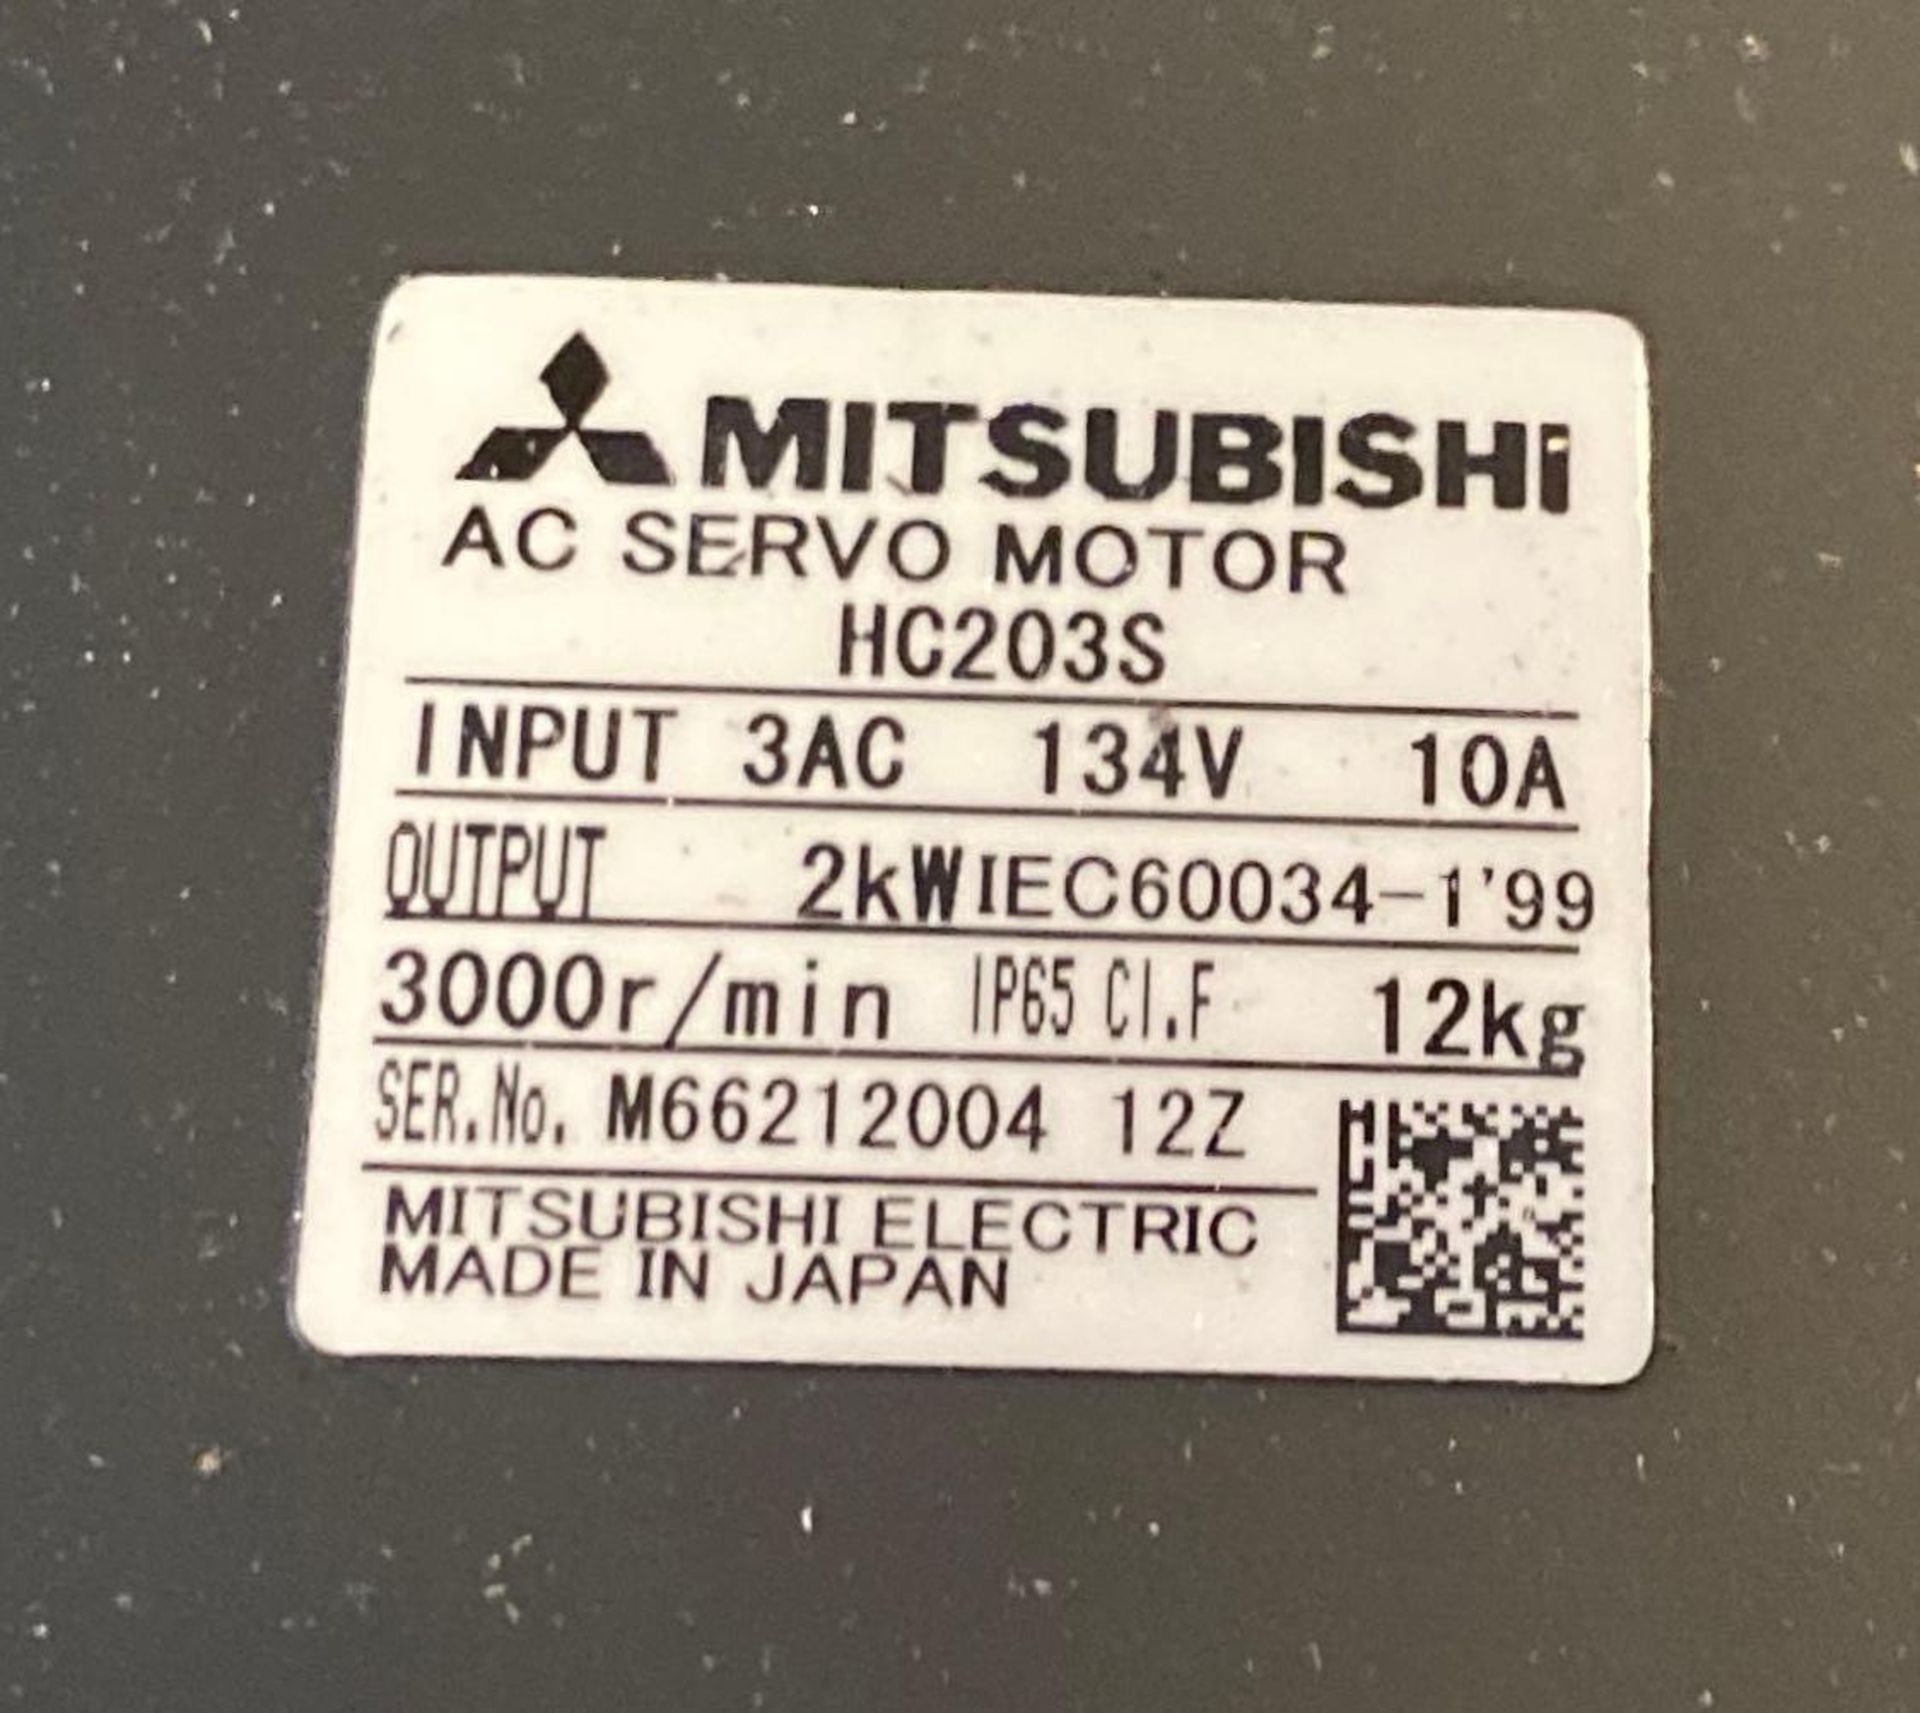 NEW IN BOX - Mitsubishi AC Servo Motor - Image 5 of 5